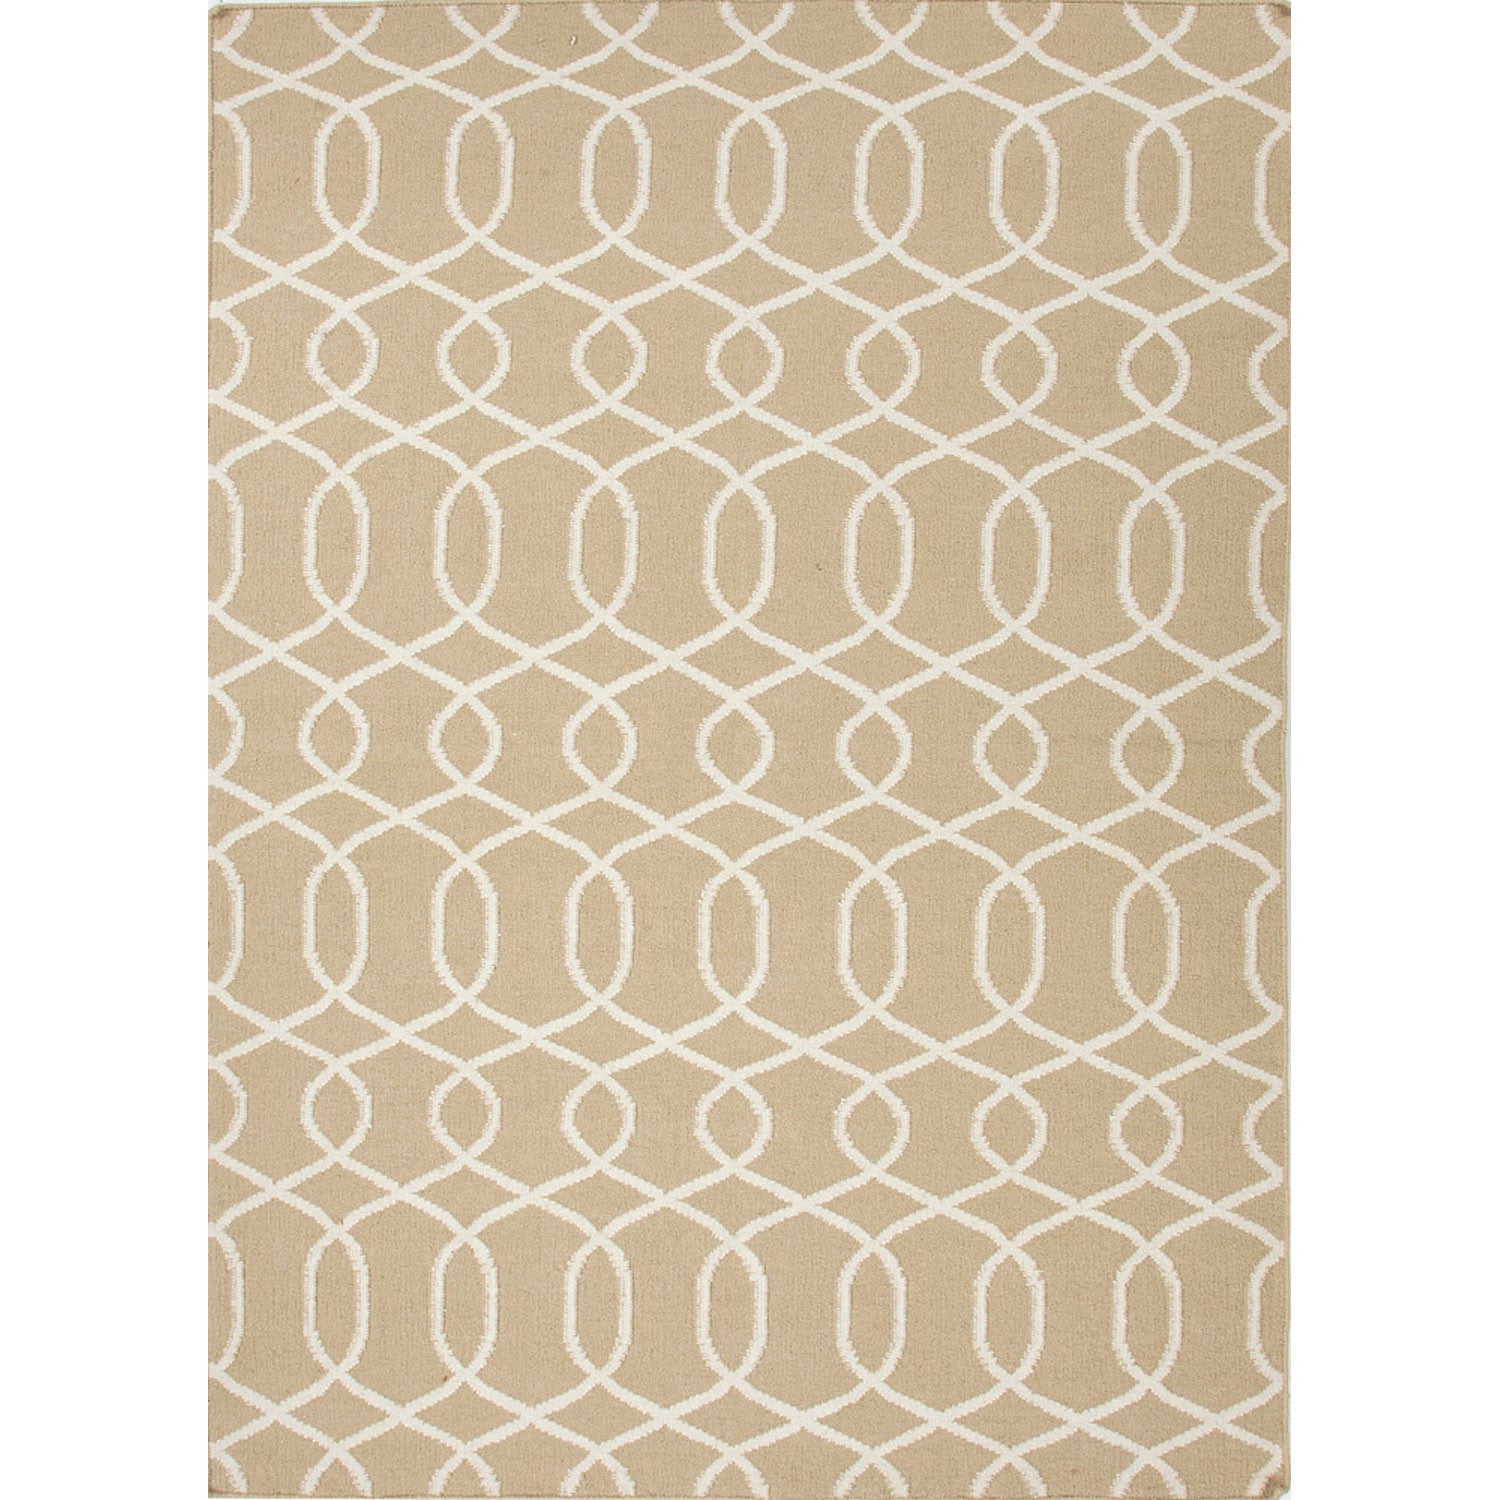 Handmade Flat Weave Geometric Pattern Brown Rug (8 X 10)